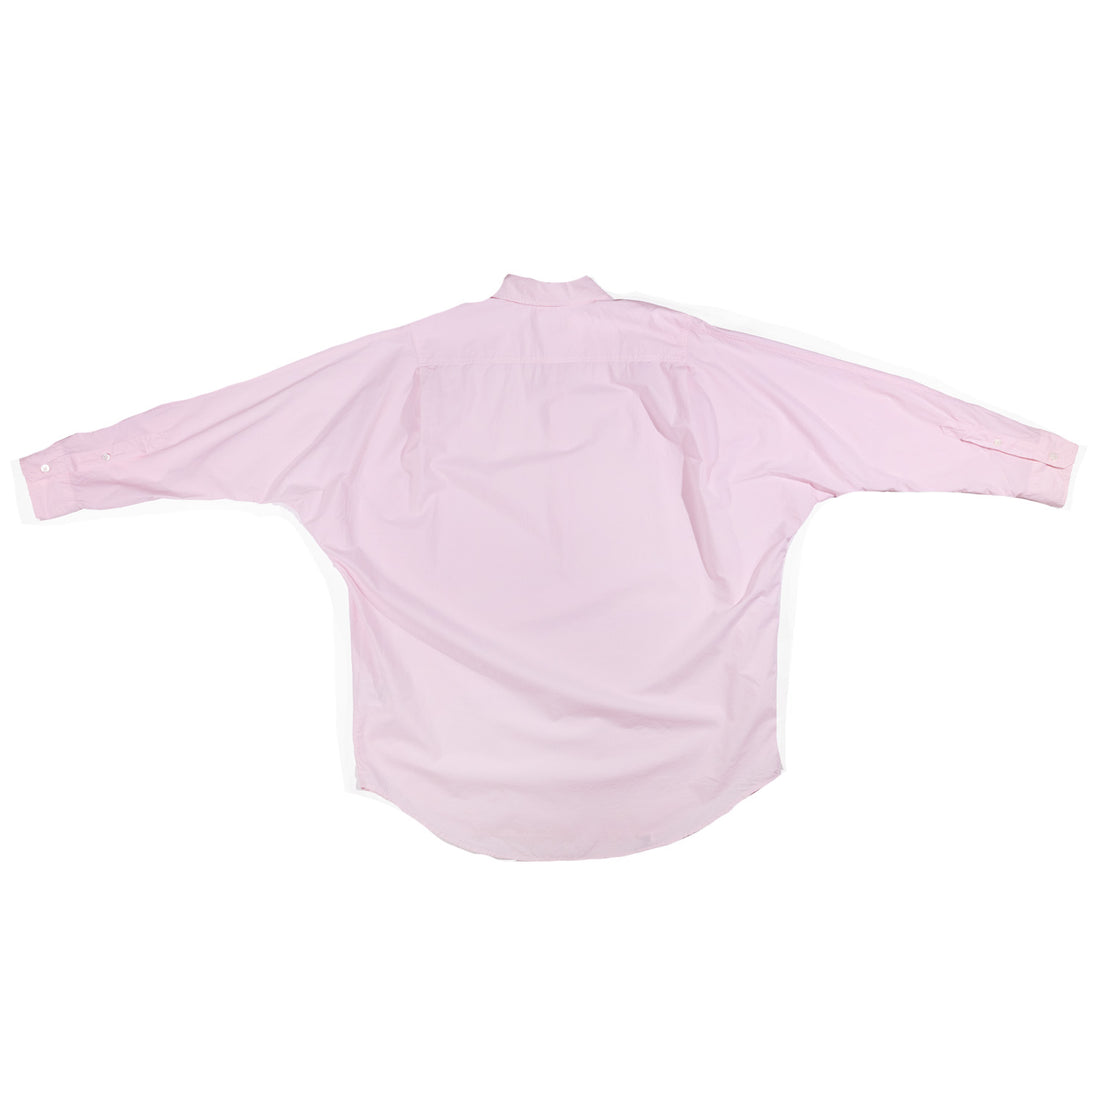 Hope Unit Shirt in LT Pink